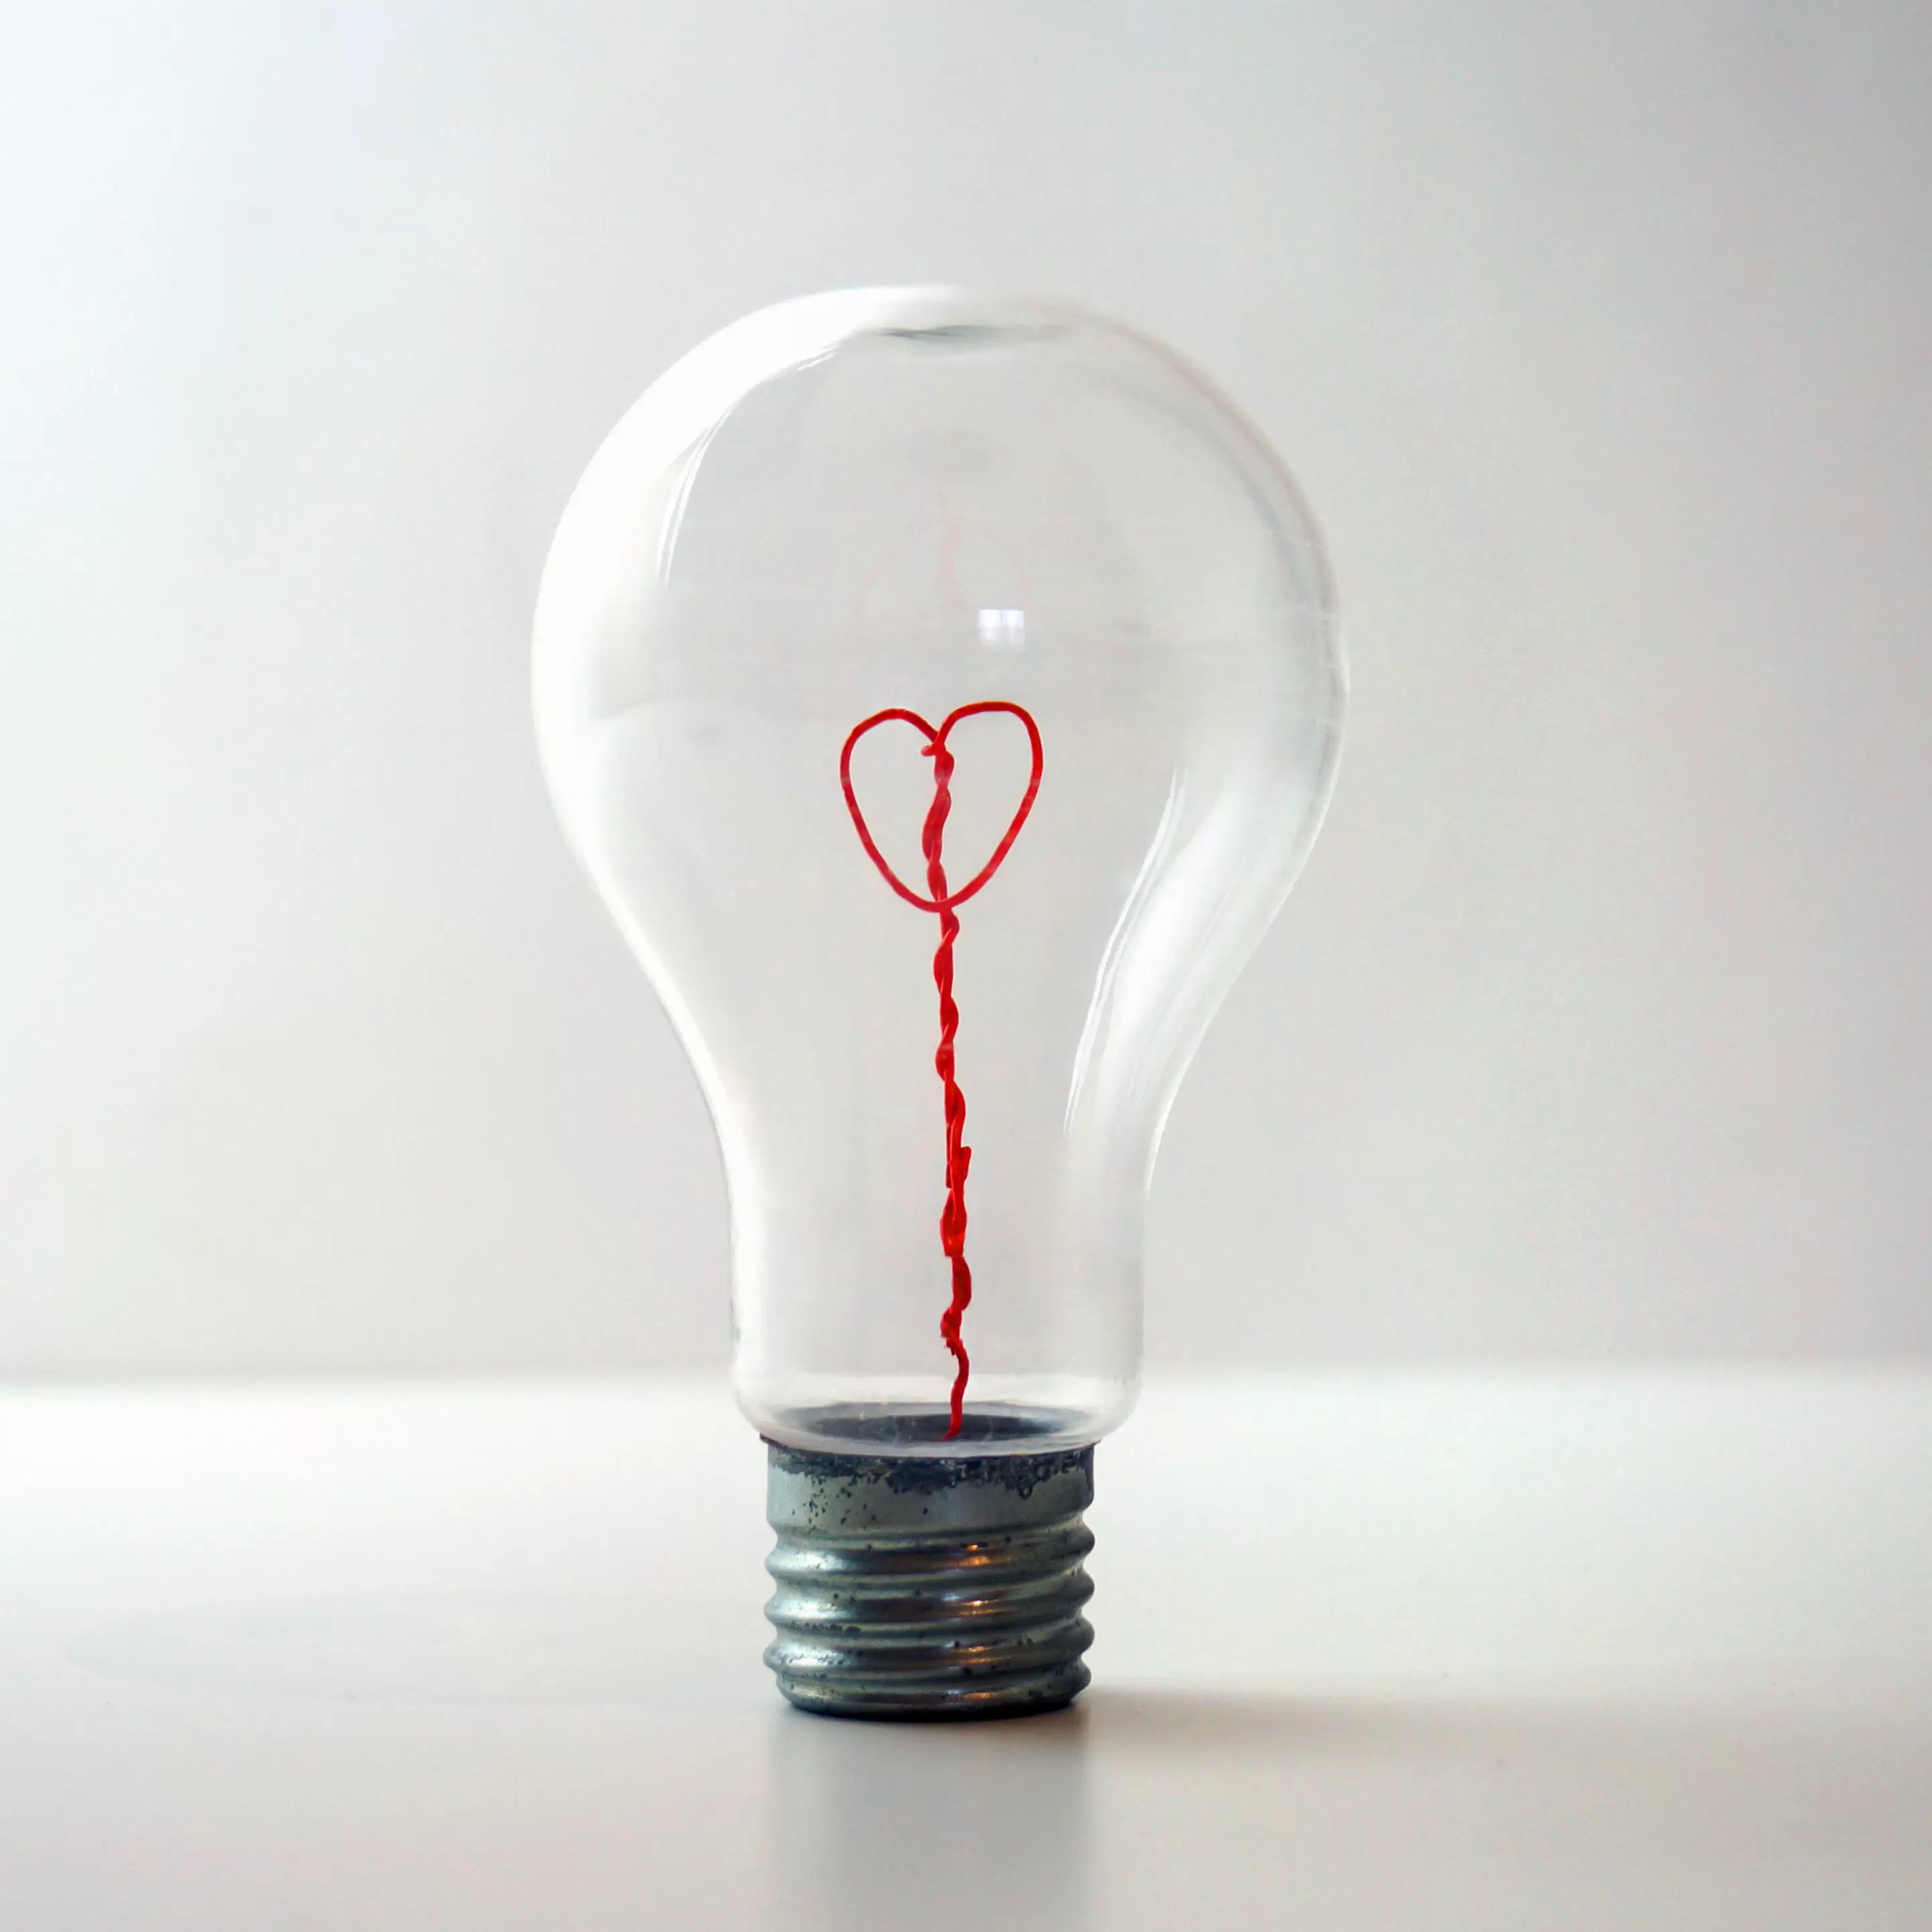 Red wire heart inside a lightbulb